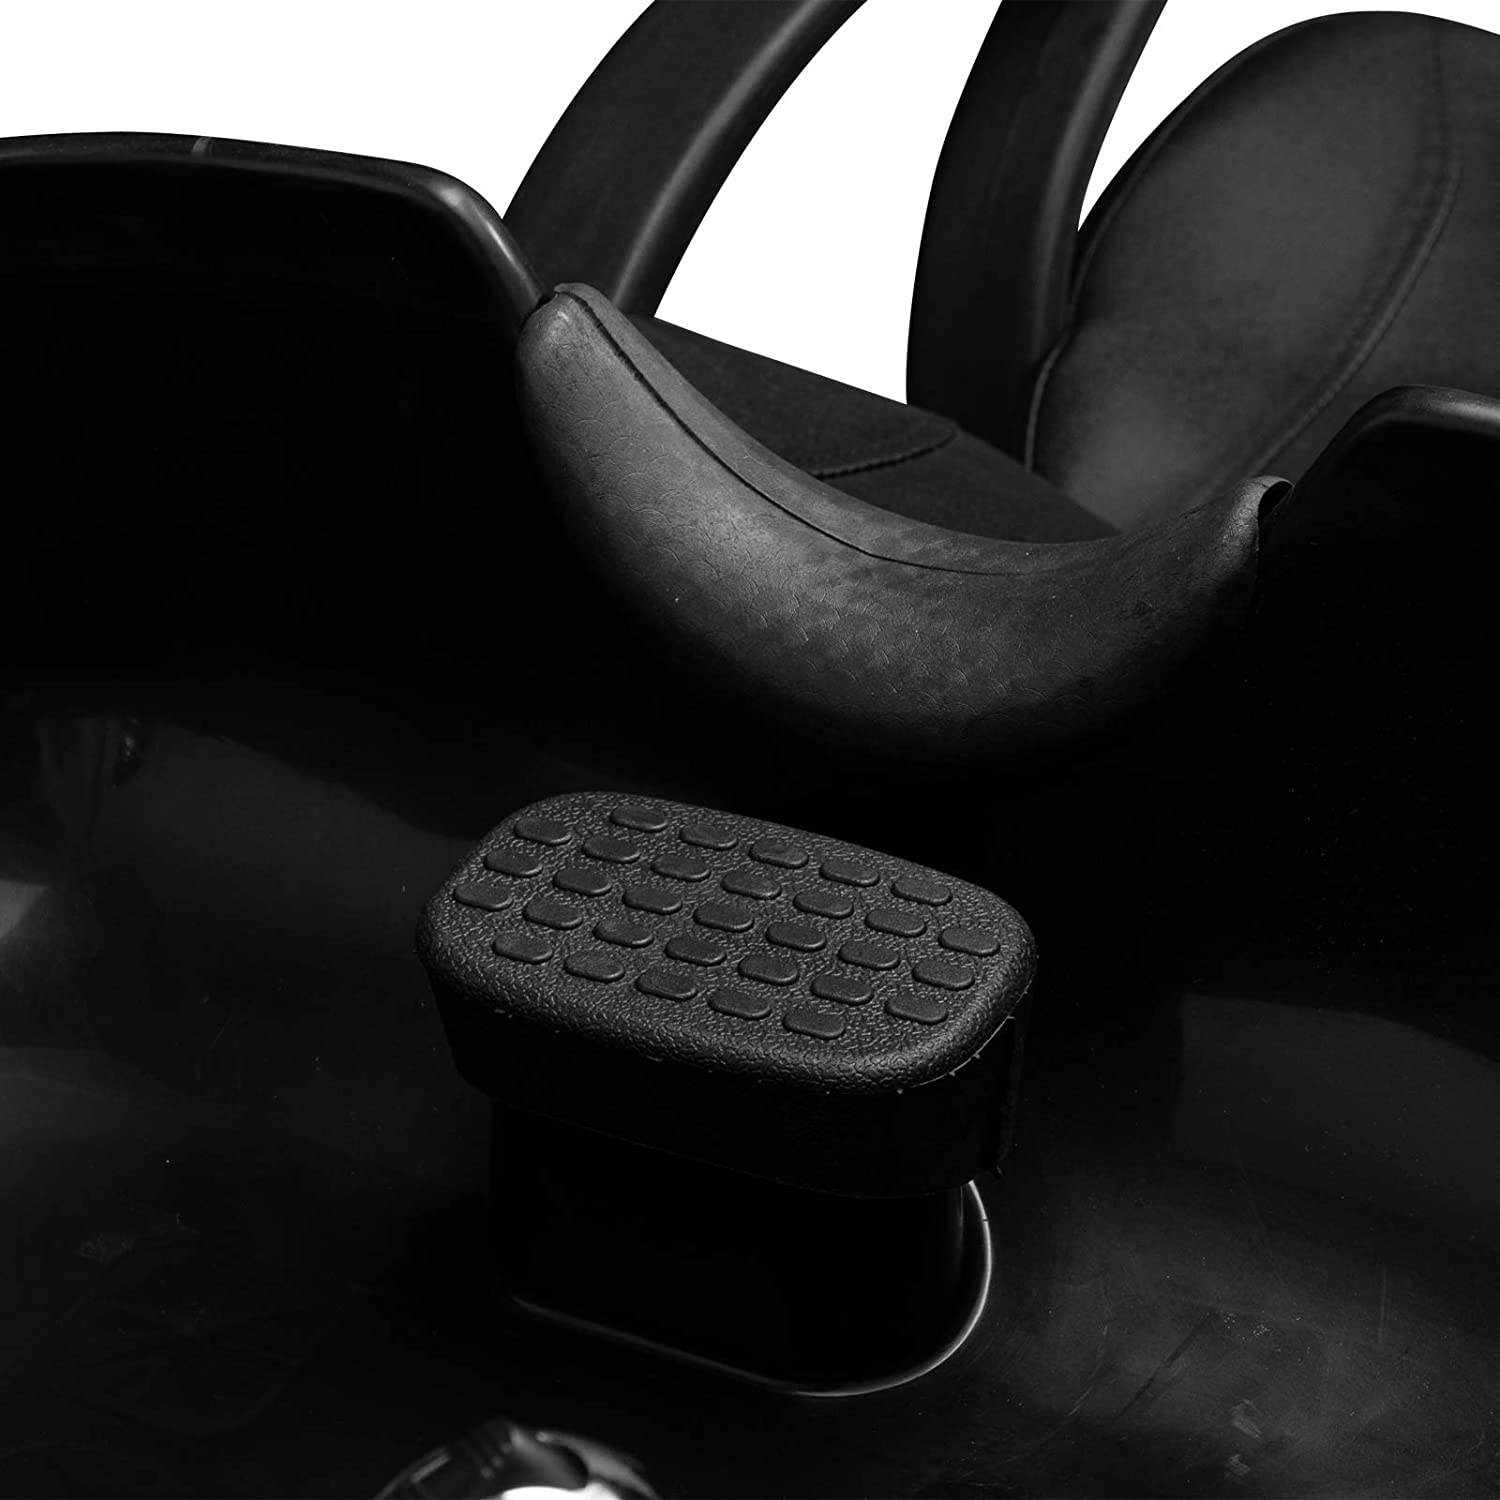 OmySalon BC01 Salon Shampoo Backwash Chair Unit with Deep ABS Plastic Shampoo Bowl